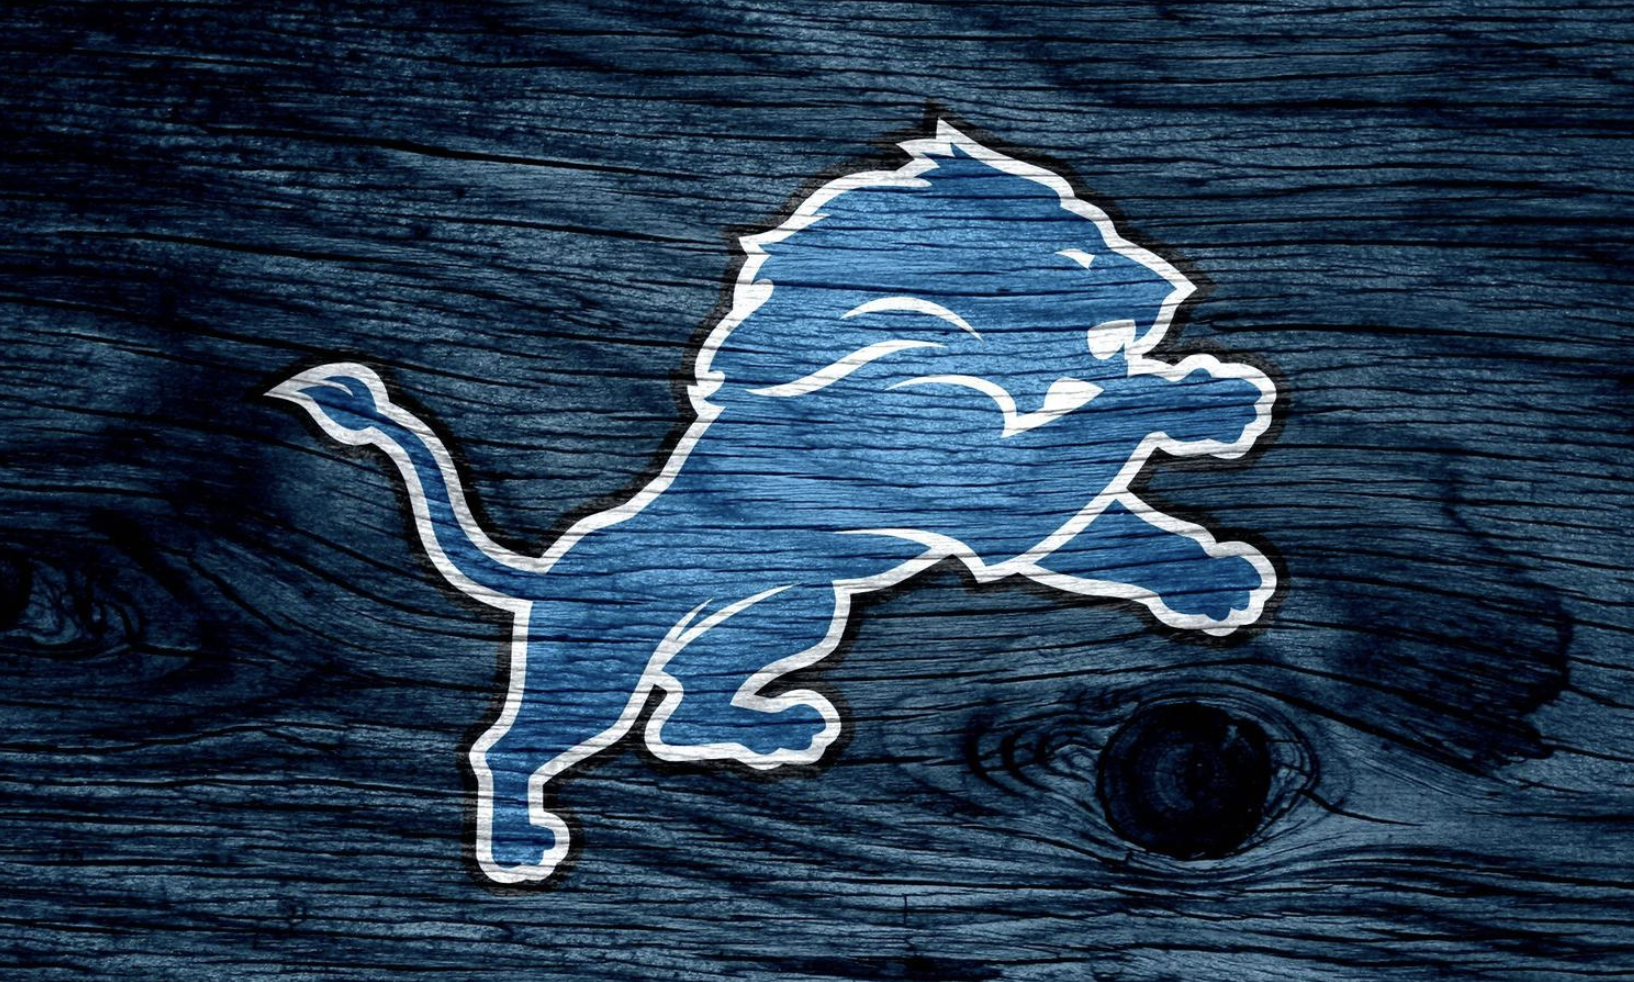 Detroit Lions trade up